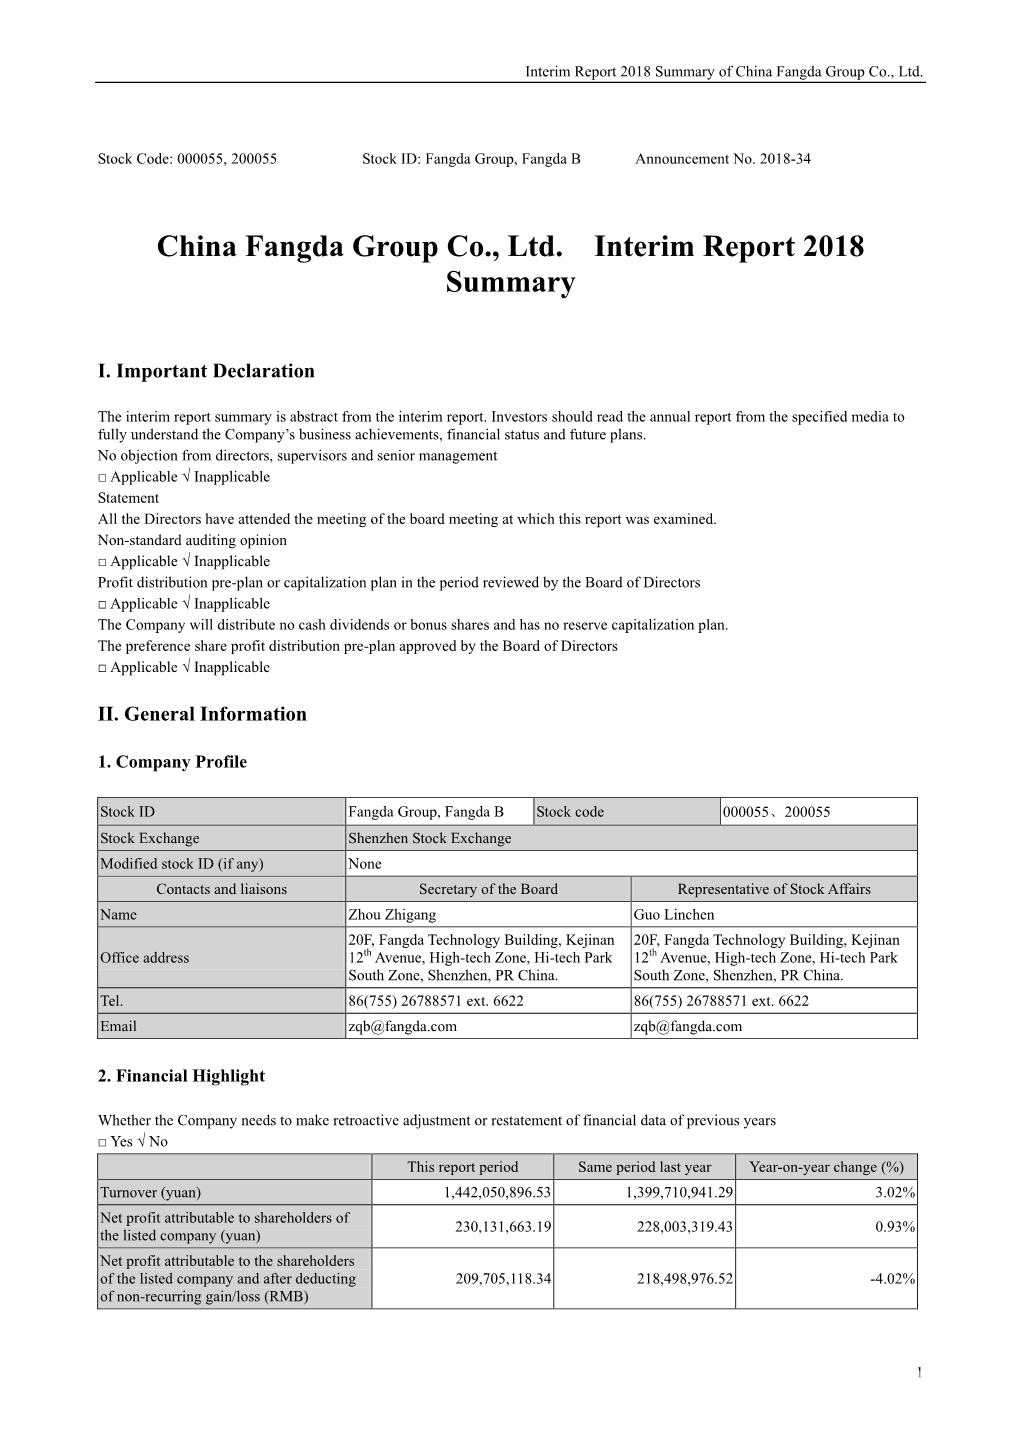 China Fangda Group Co., Ltd. Interim Report 2018 Summary